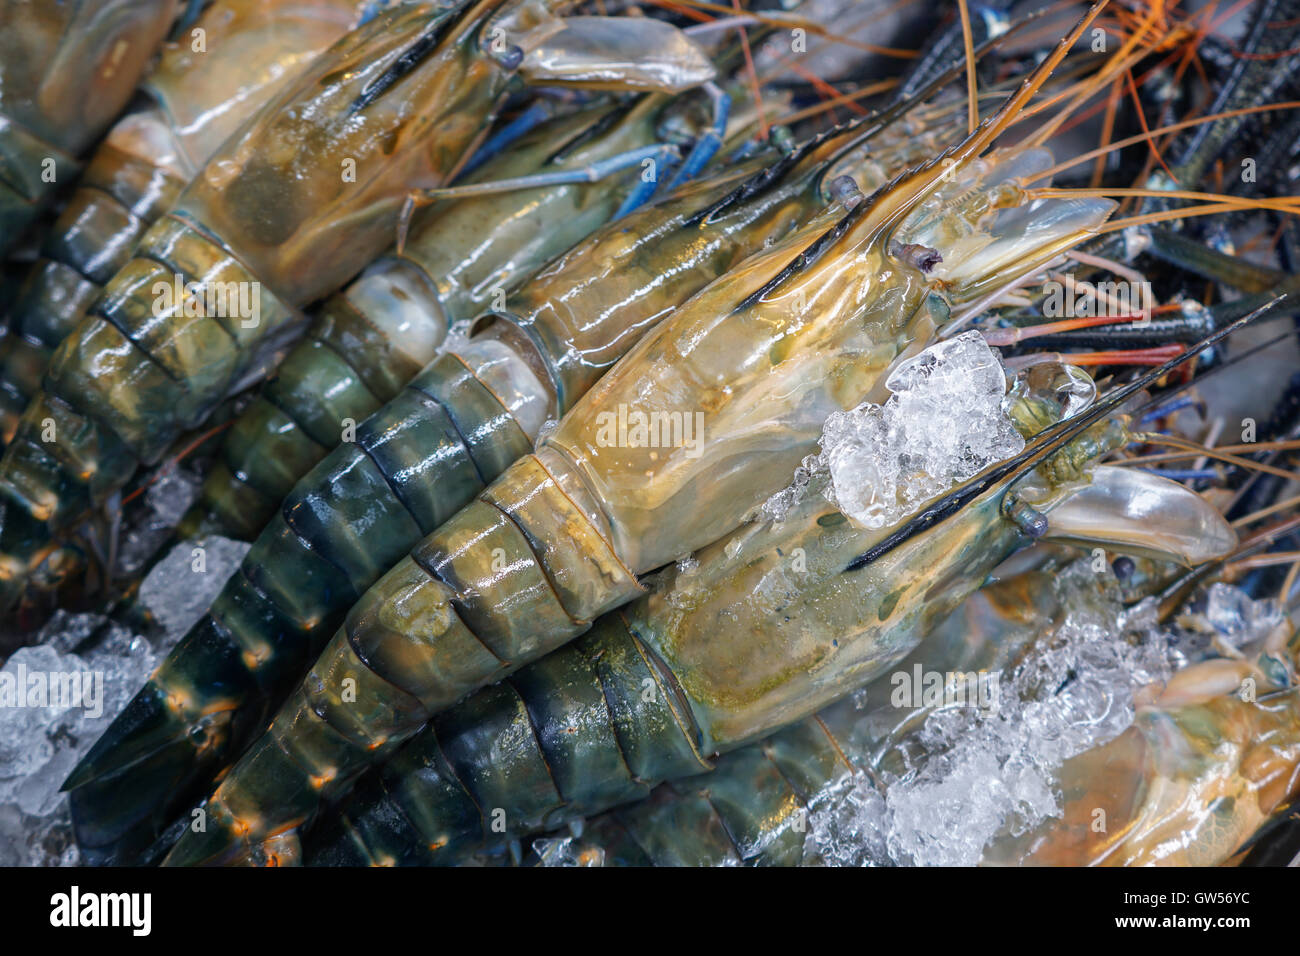 giant river shrimp in fresh market Stock Photo